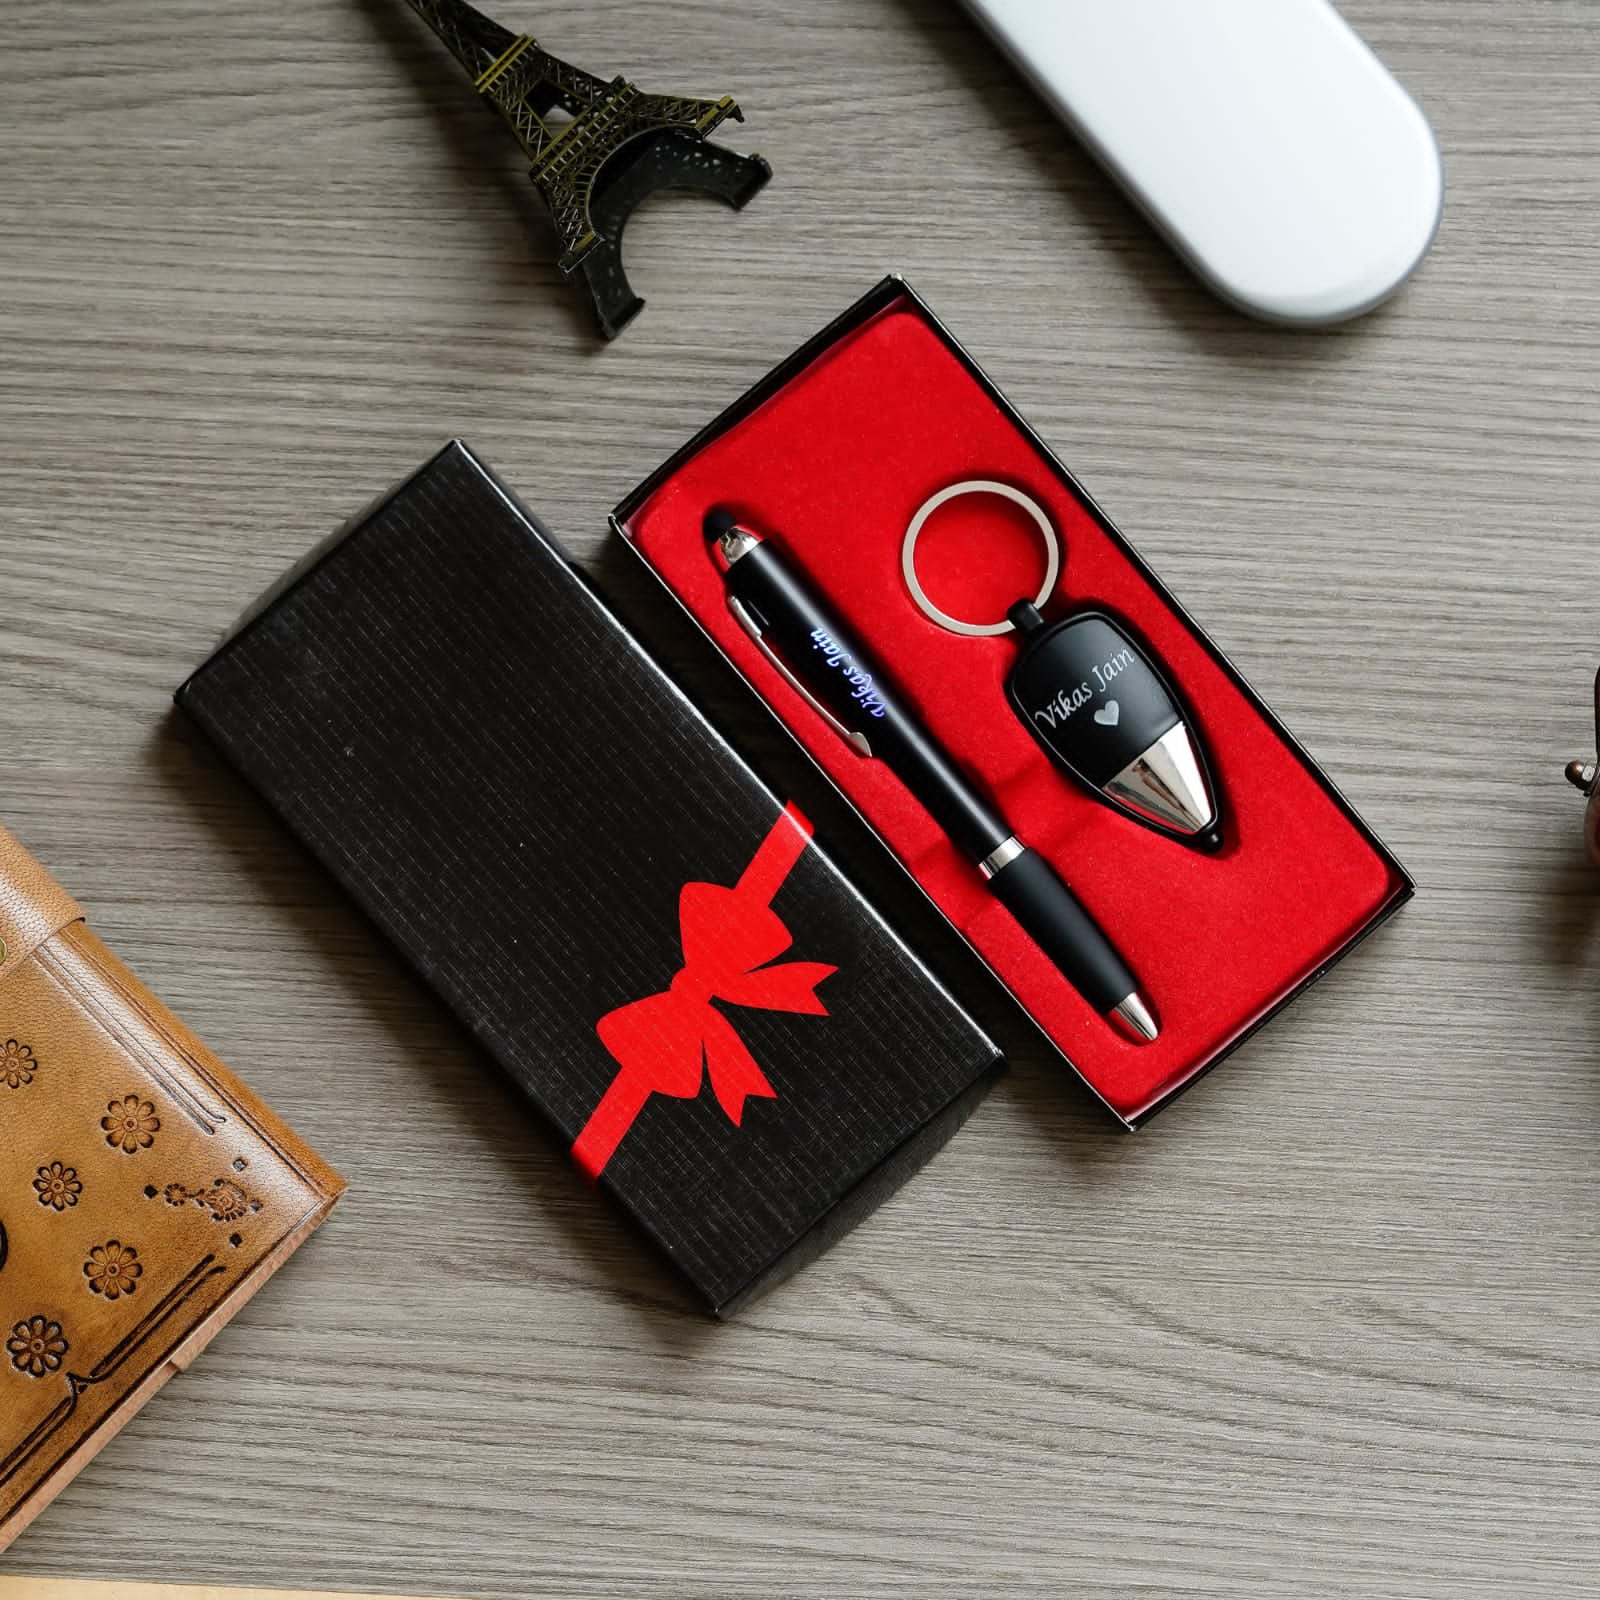 Giftana Leather 2 in 1 Gift Set - Custom Keychain and Pen